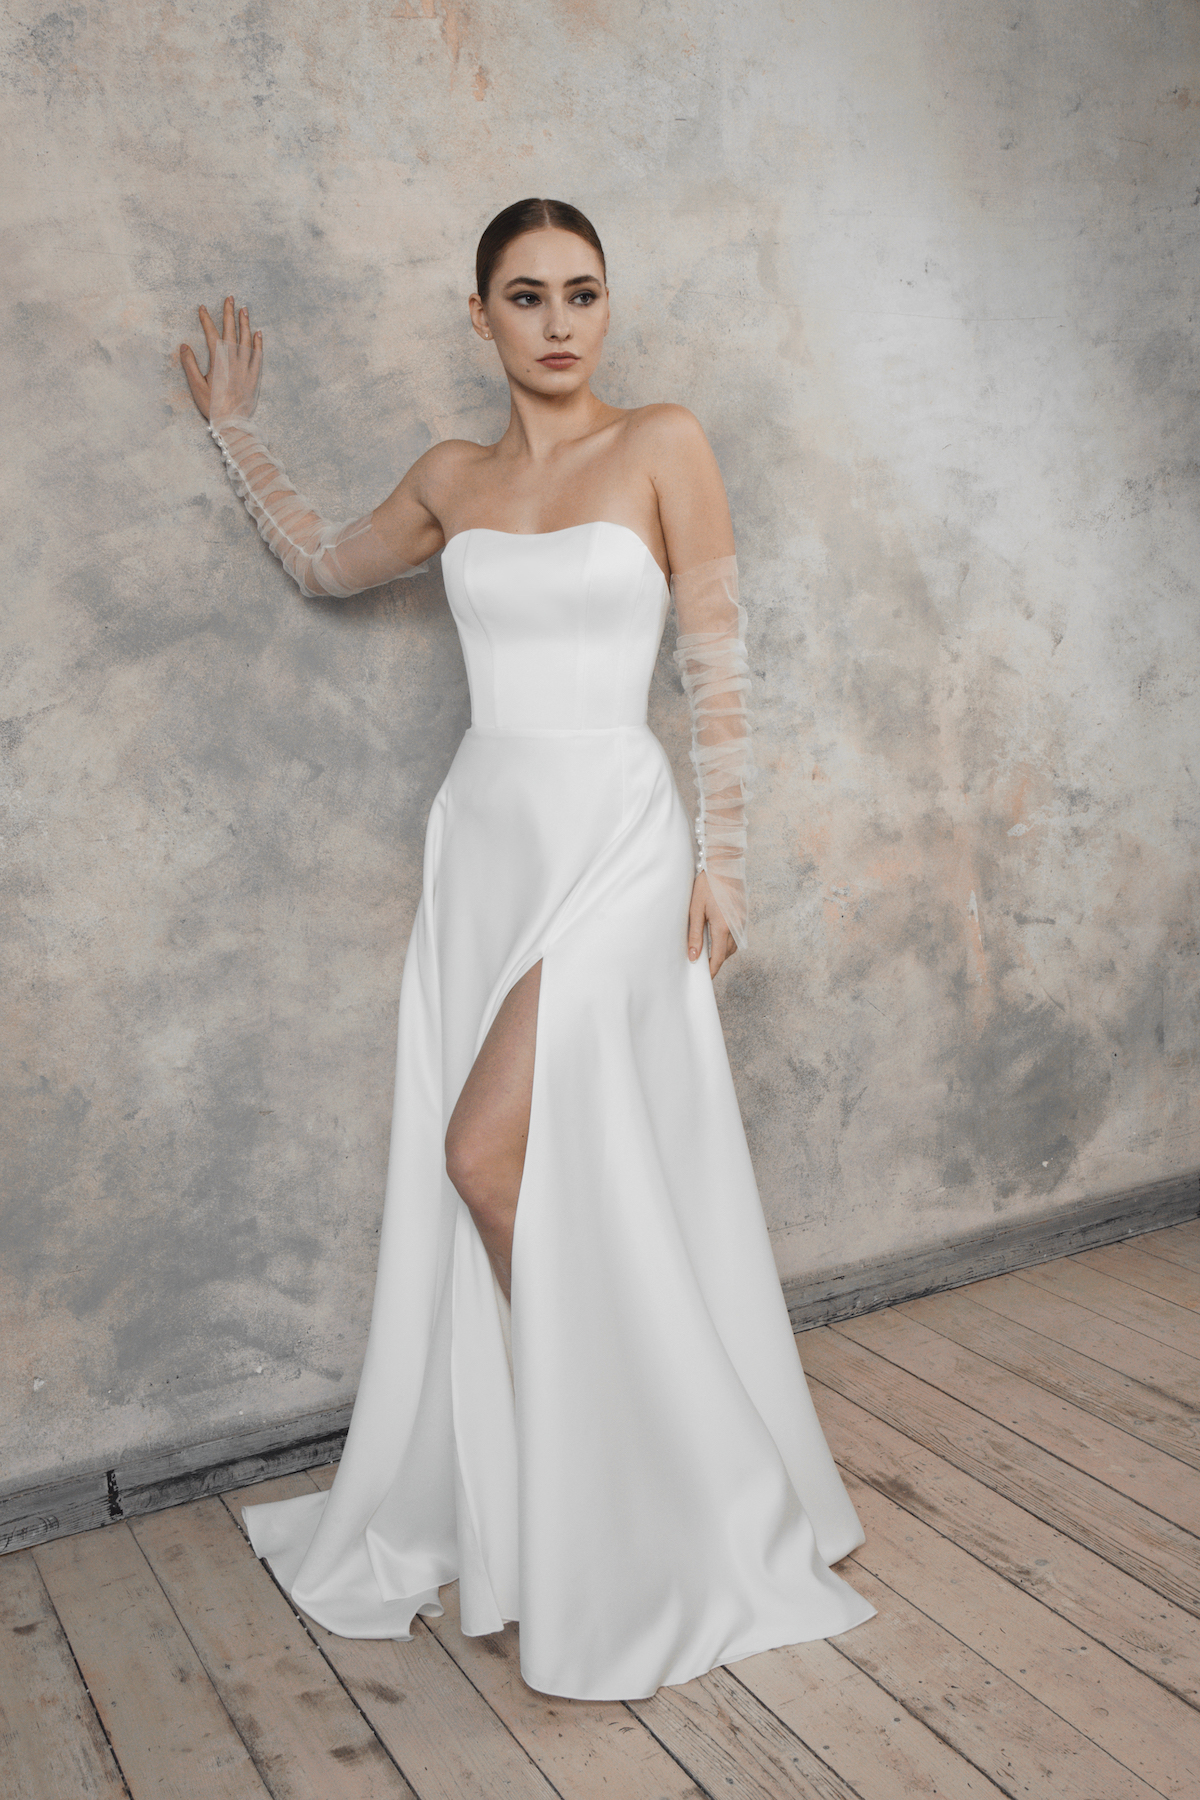 corset wedding dress